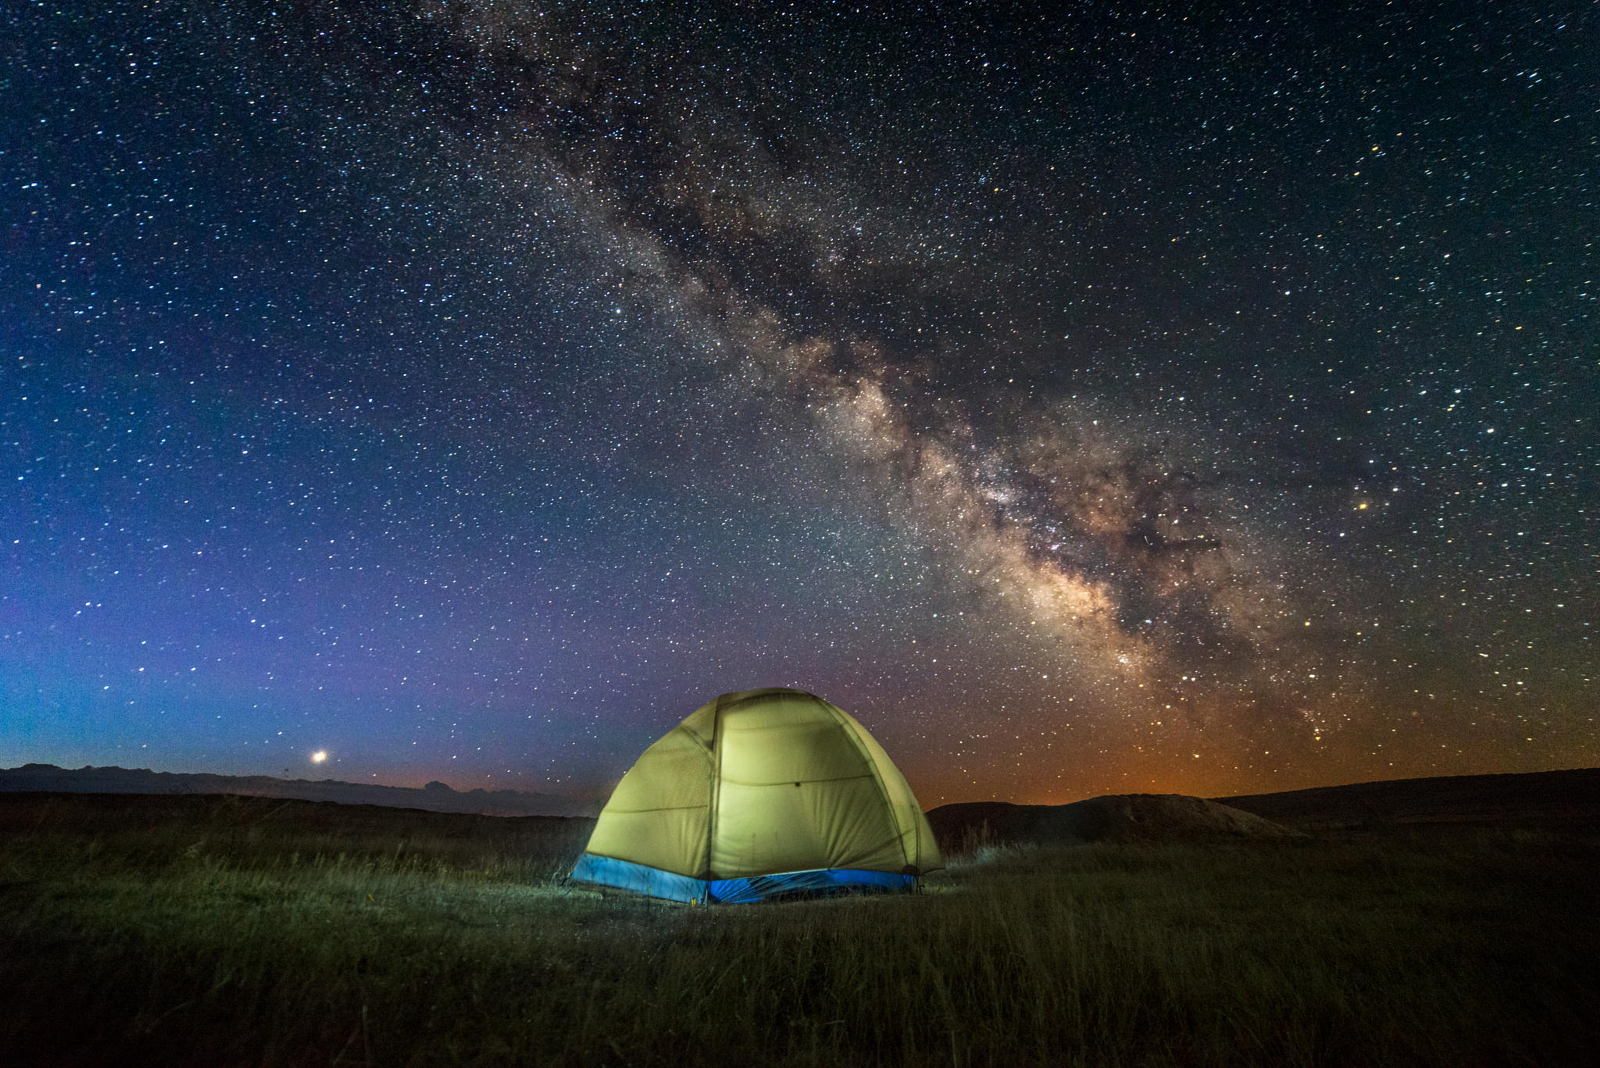 Go Stargazing With These 21 Stellar Night Sky Photos